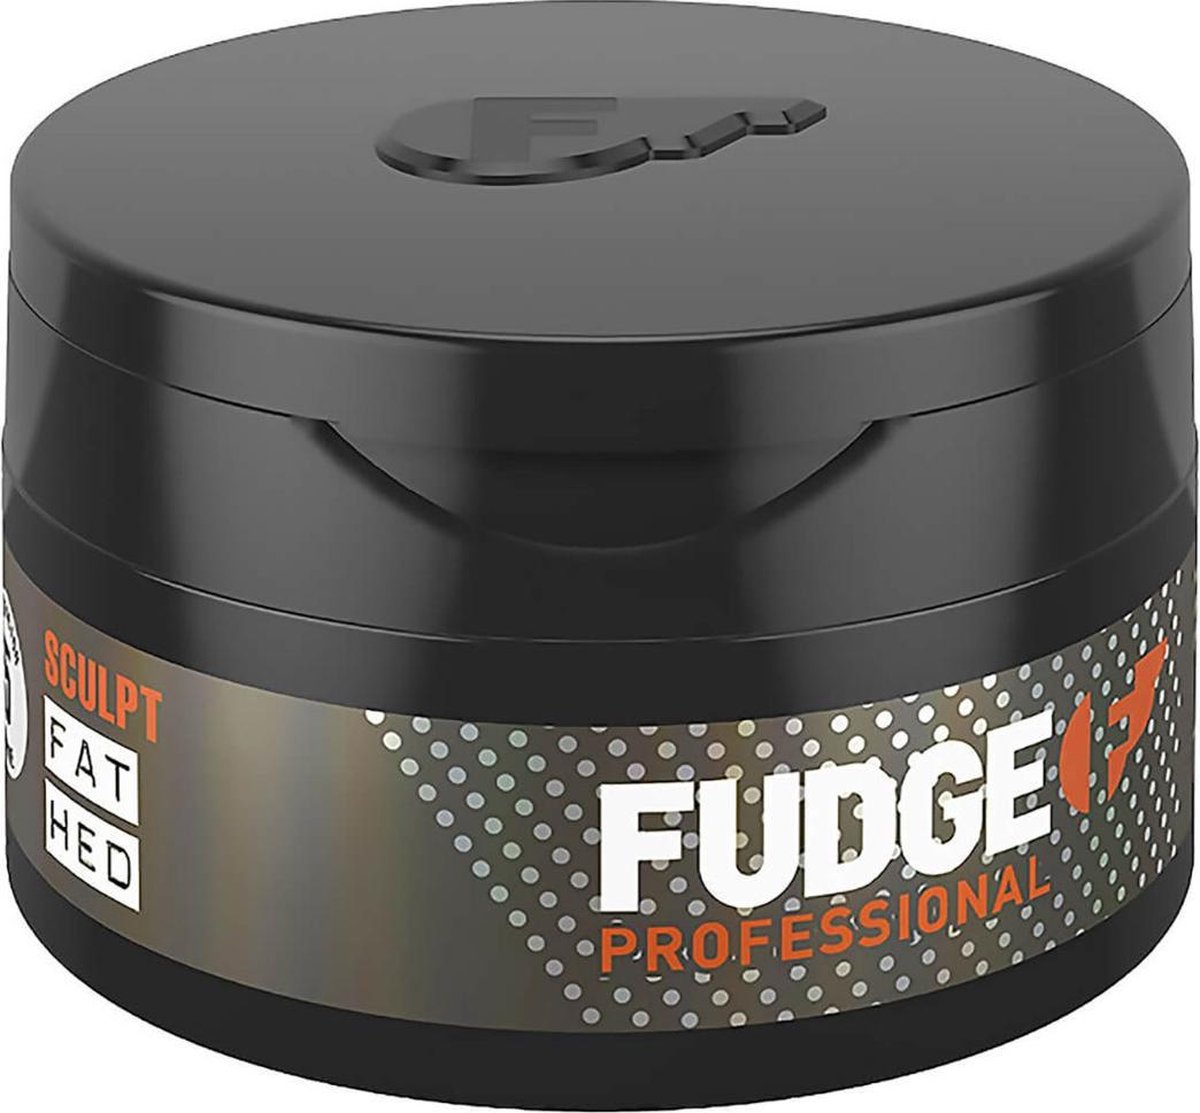 Fudge Professional - Haar wax - Fat Hed - 75gr - Fudge